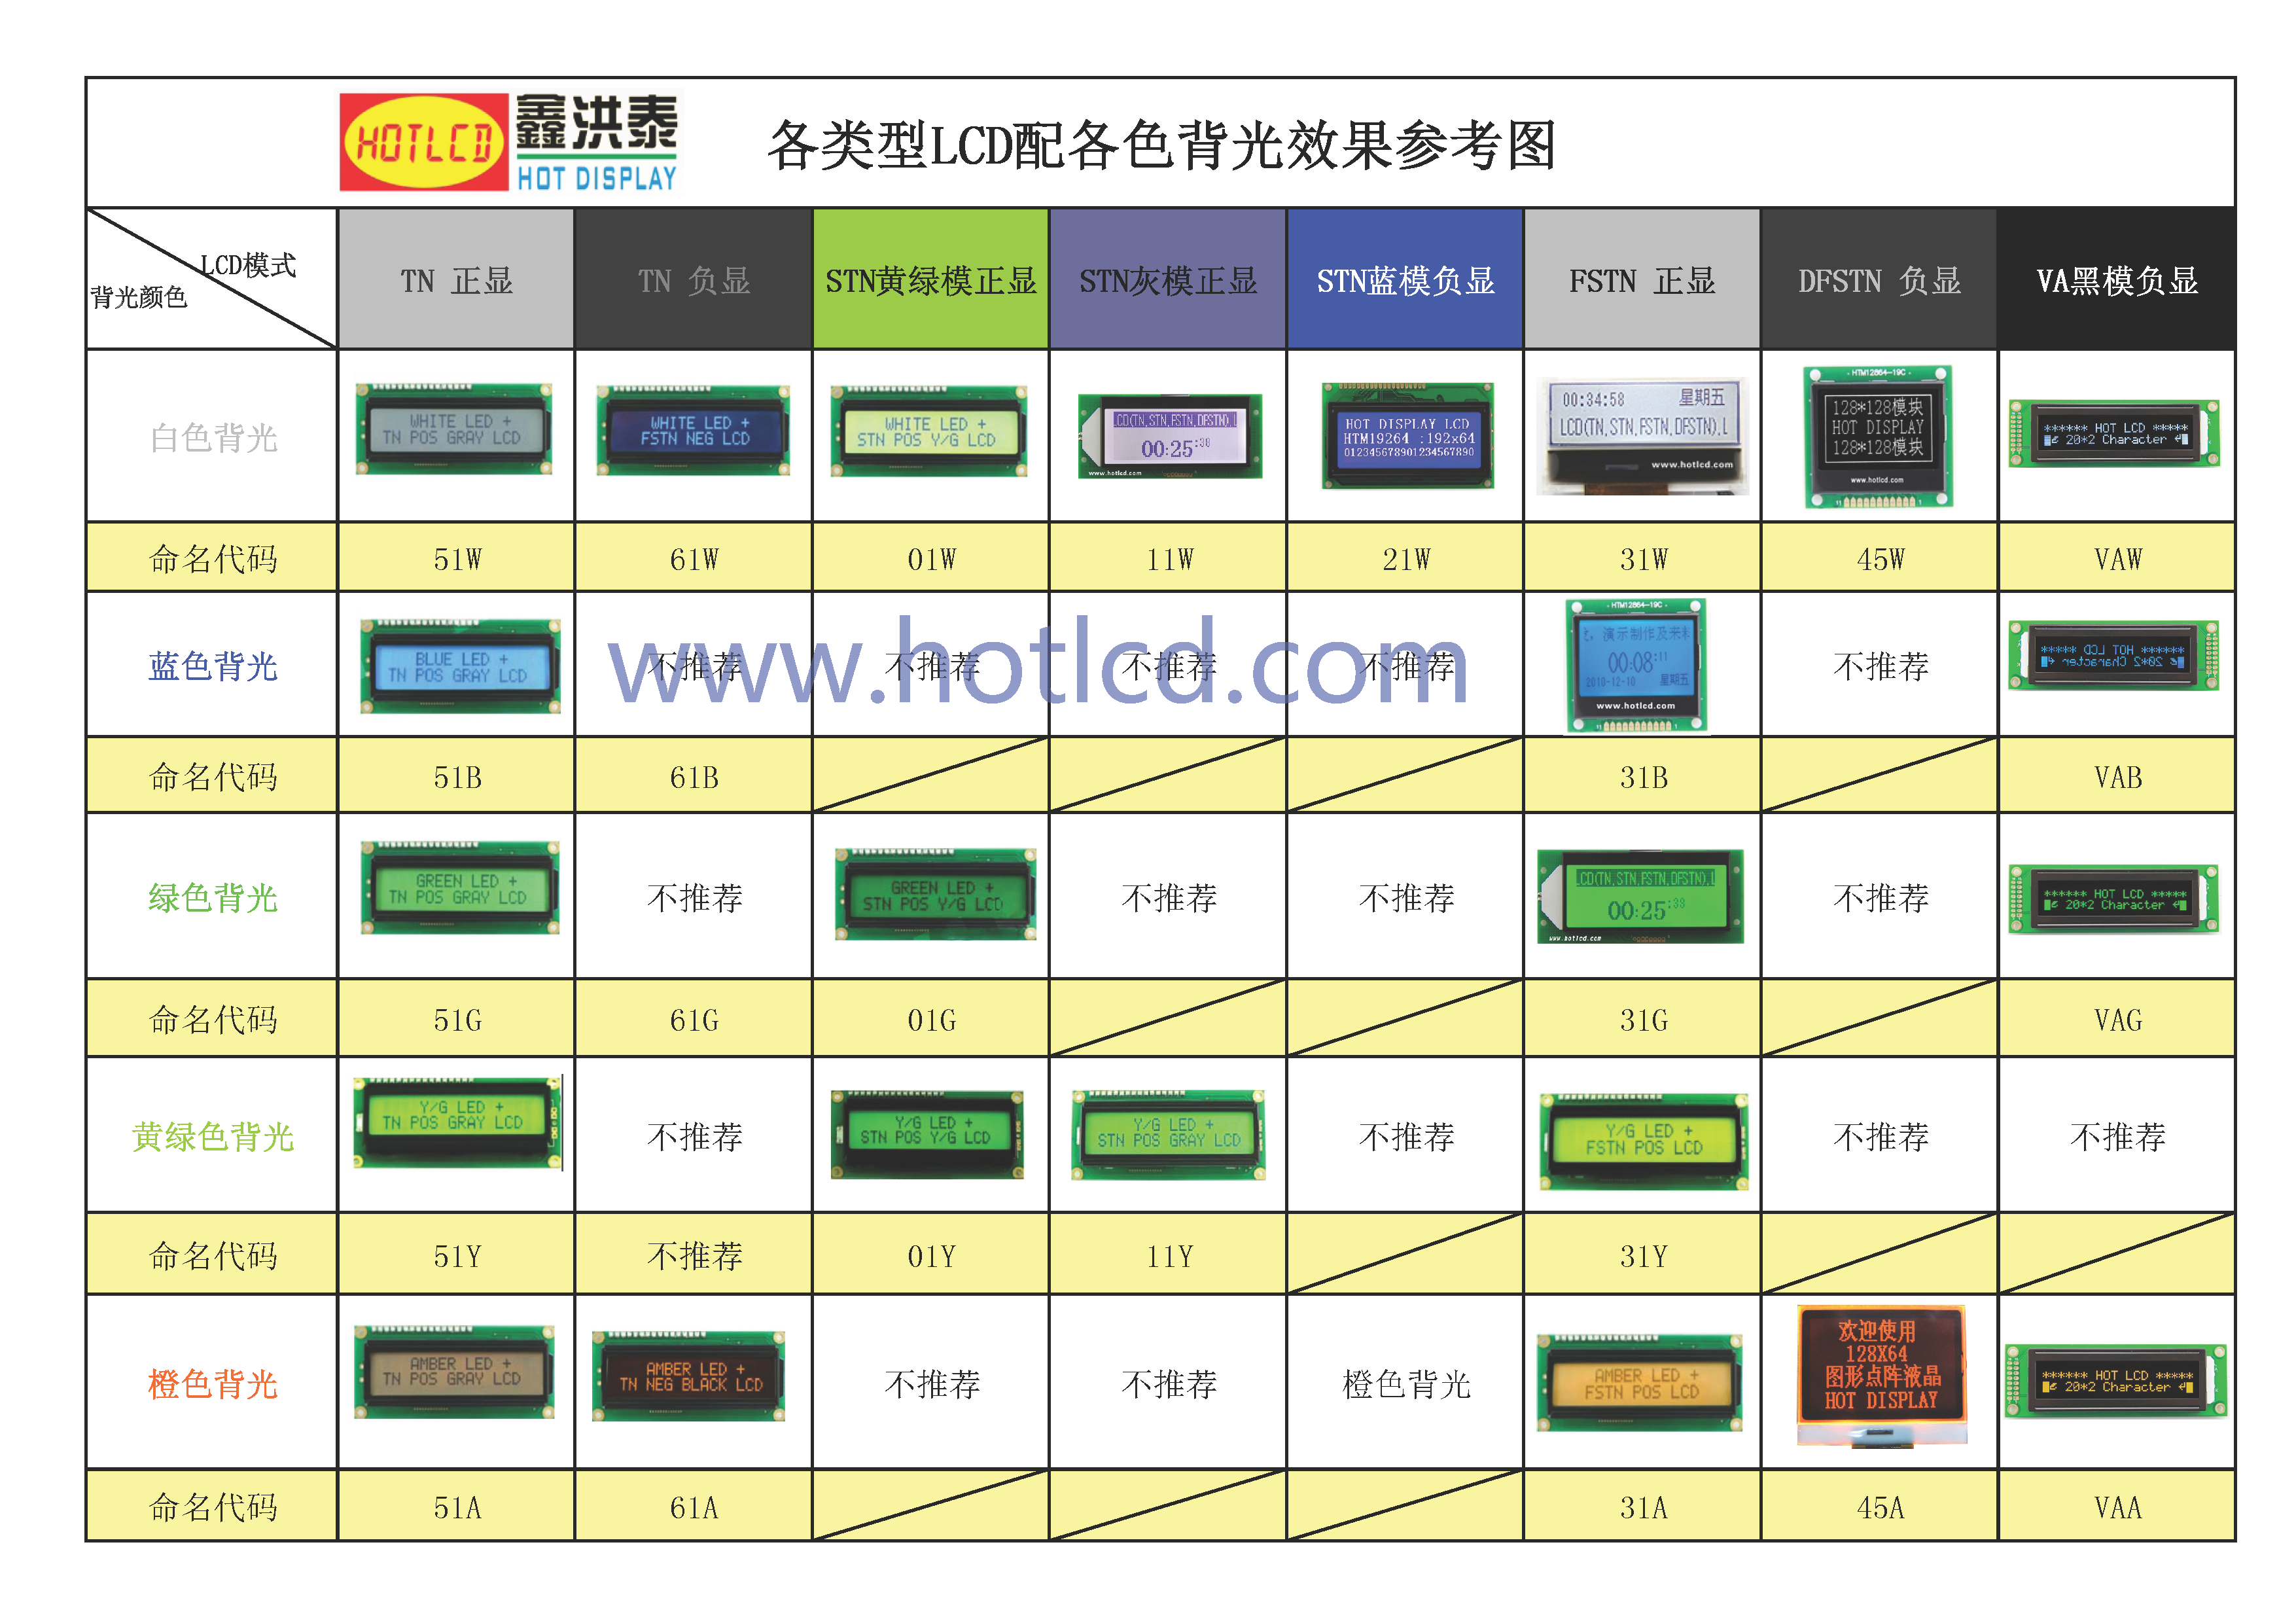 LCD搭配各色背光效果图(HOTLCD).png